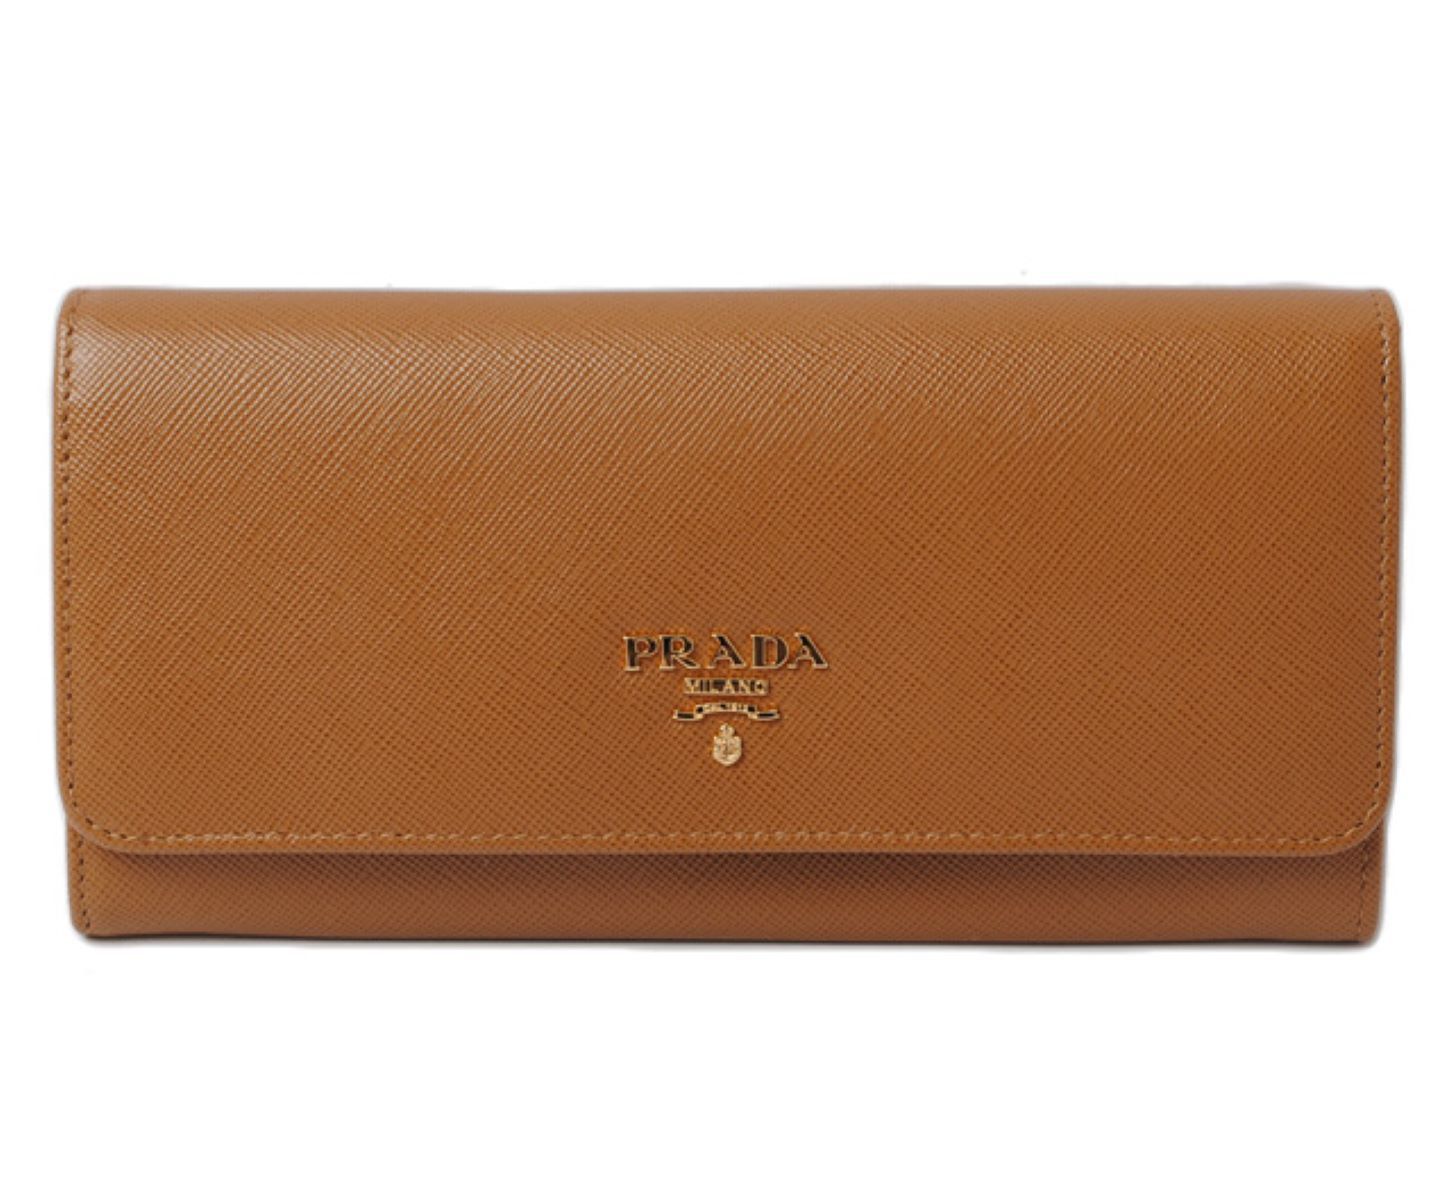 prada wallet leather